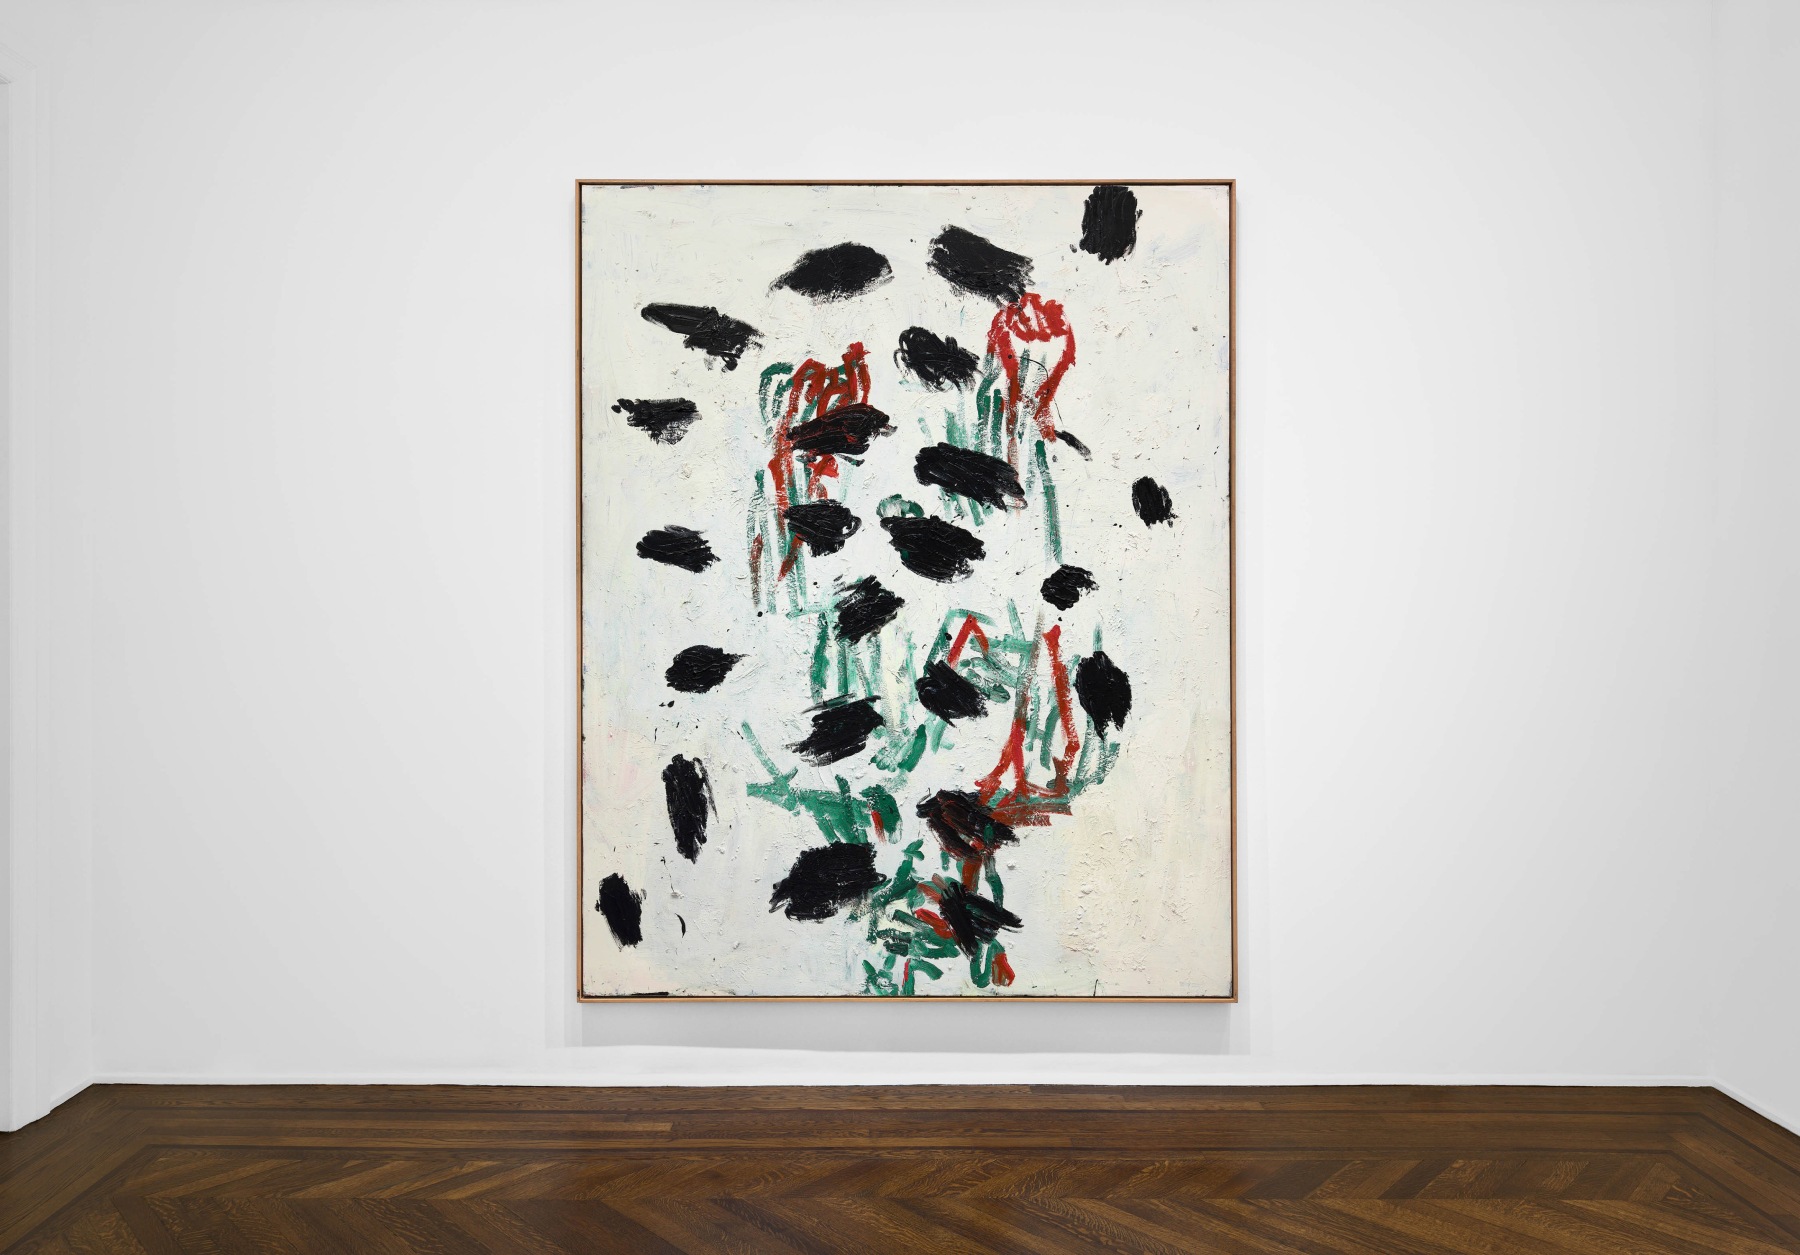 Georg Baselitz, 1977-1992, New York, 2017-2018, Installation Image 10